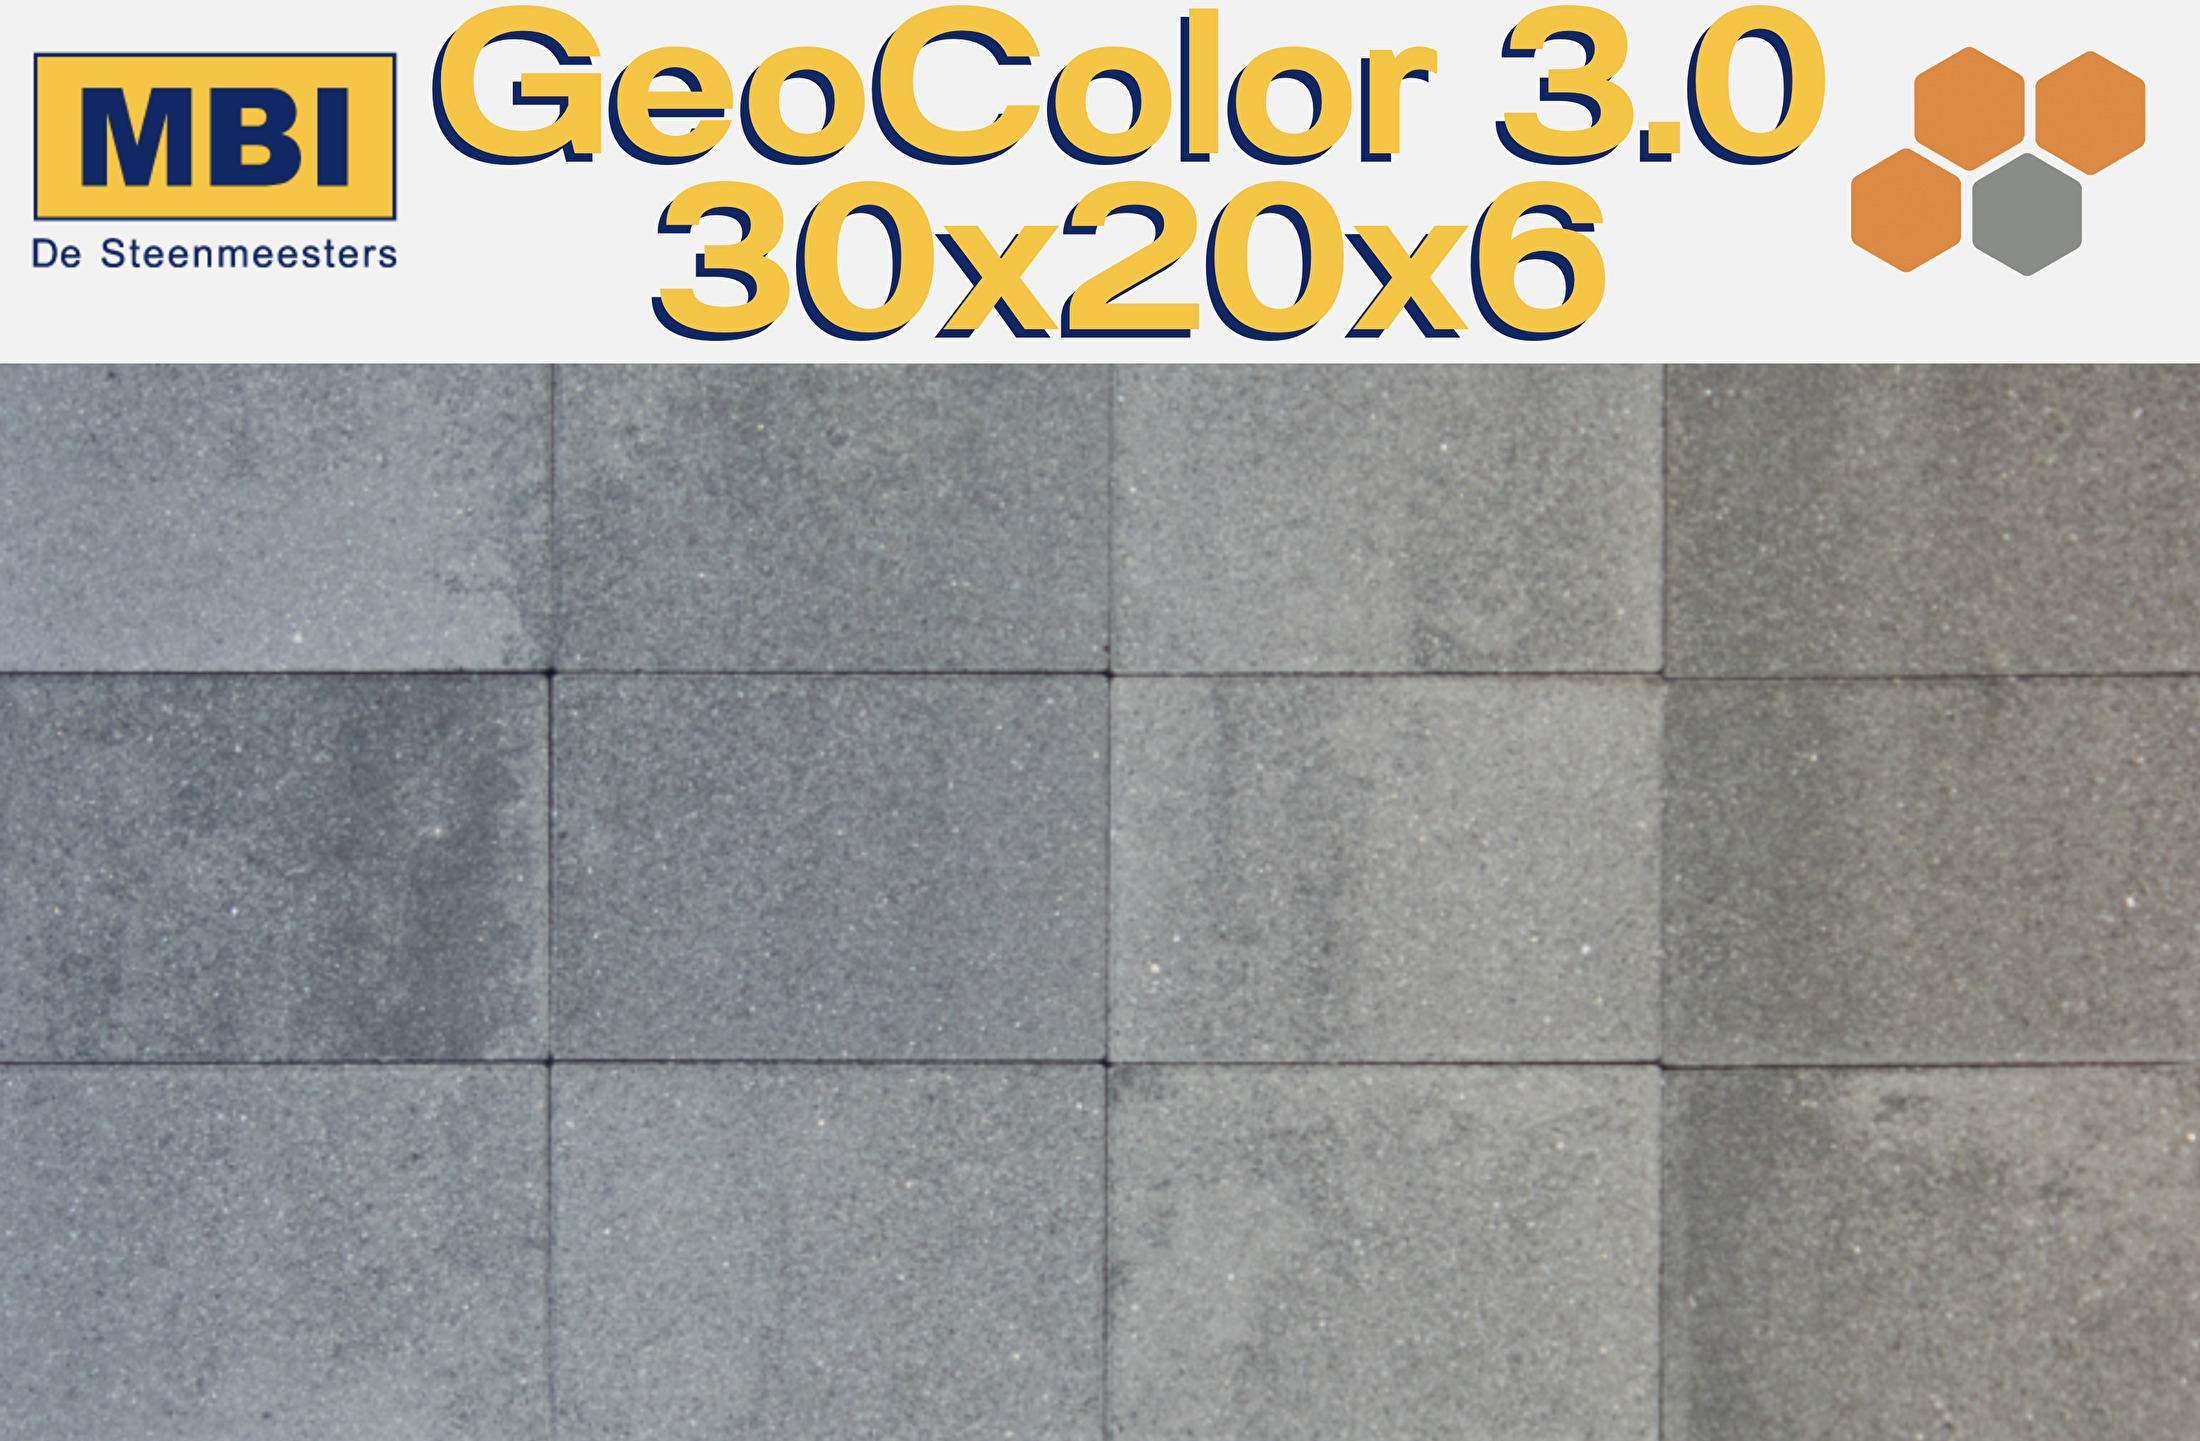 GeoColor 3.0 30x20x6